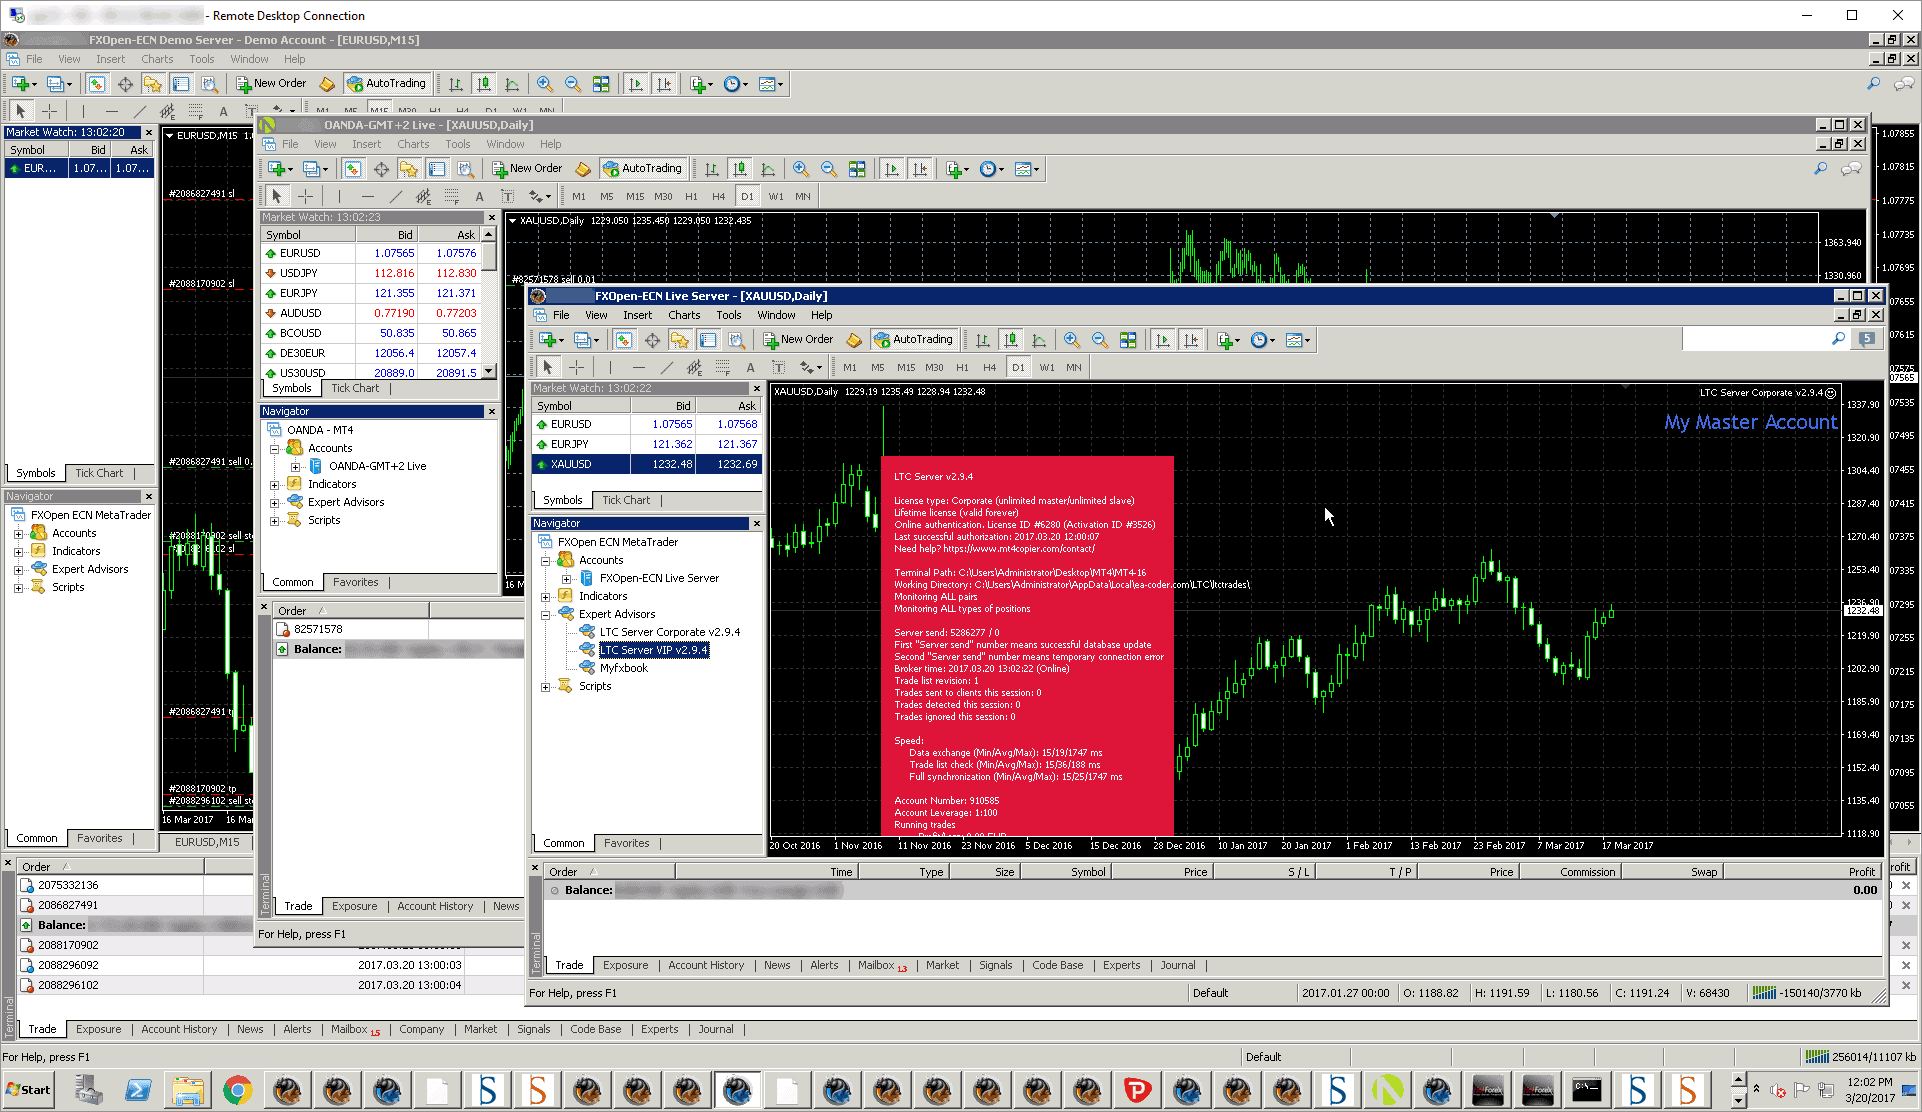 Trade copier mt4 jforex expert binary options 60 seconds